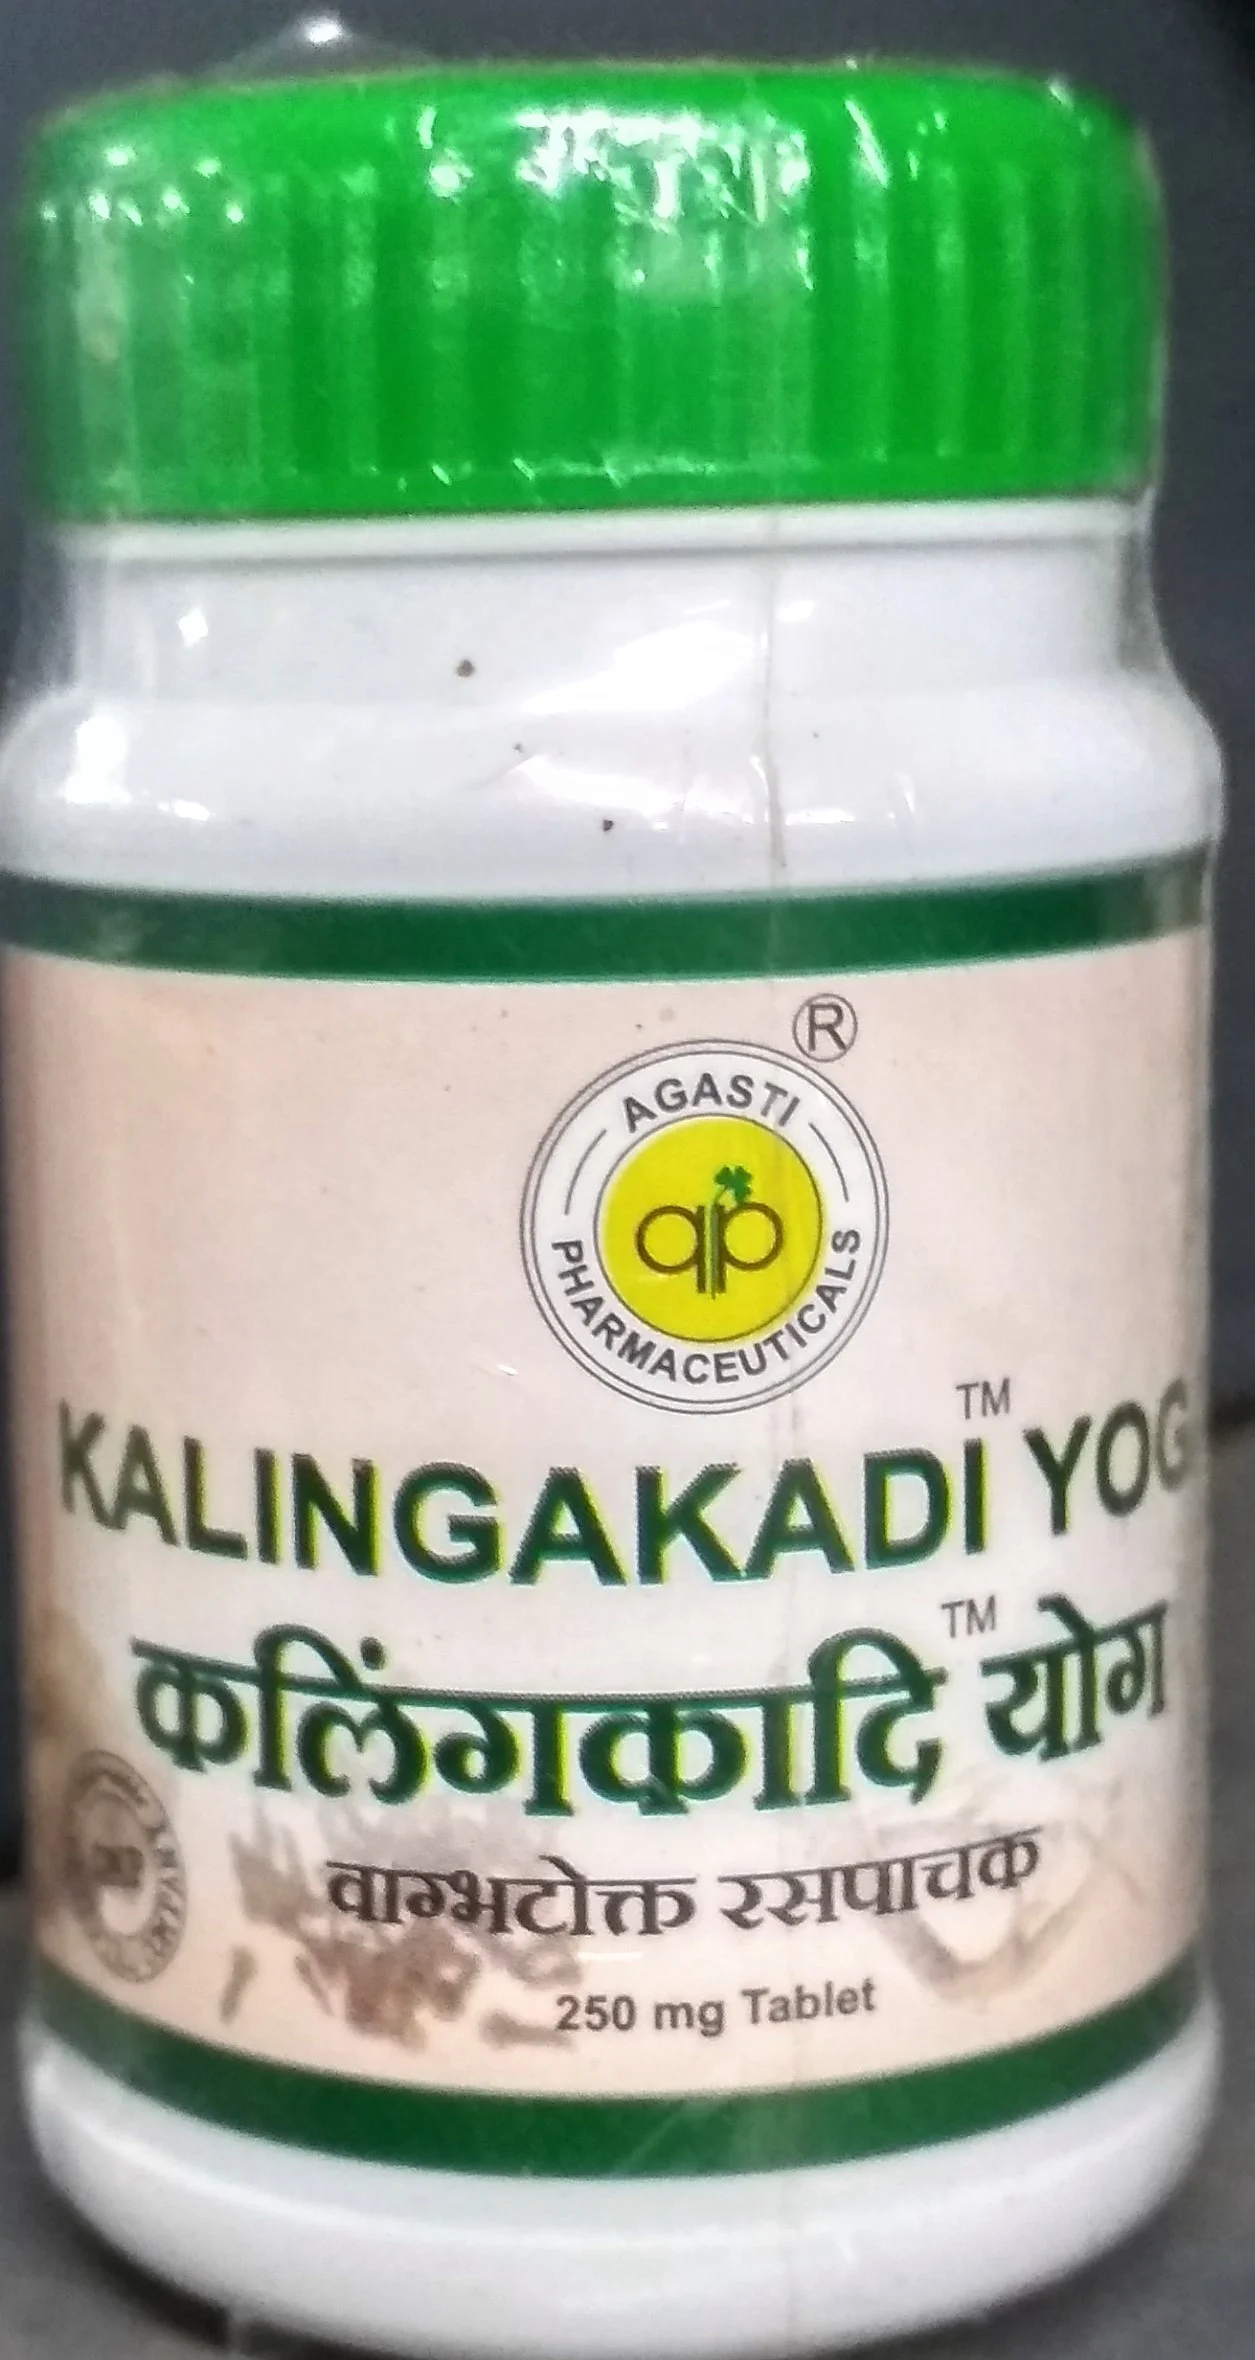 kalingakadi yog 100gm 400 tablet upto 15% off agasti pharmaceuticals